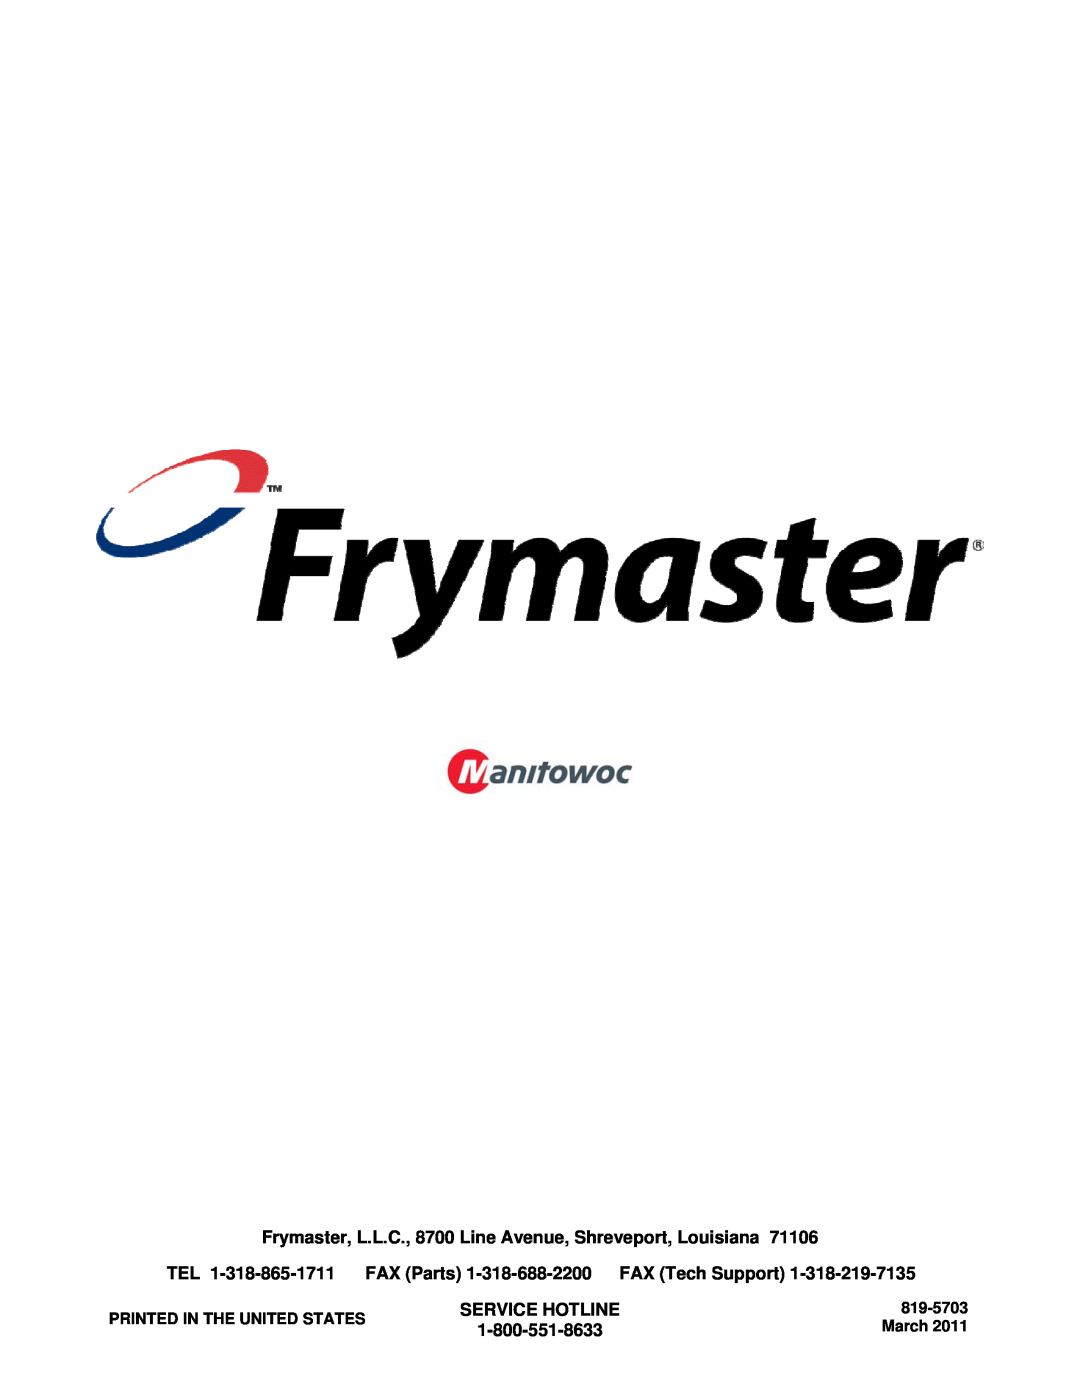 Frymaster SDU 90, BKSDU manual Frymaster, L.L.C., 8700 Line Avenue, Shreveport, Louisiana, Service Hotline, 819-5703, March 